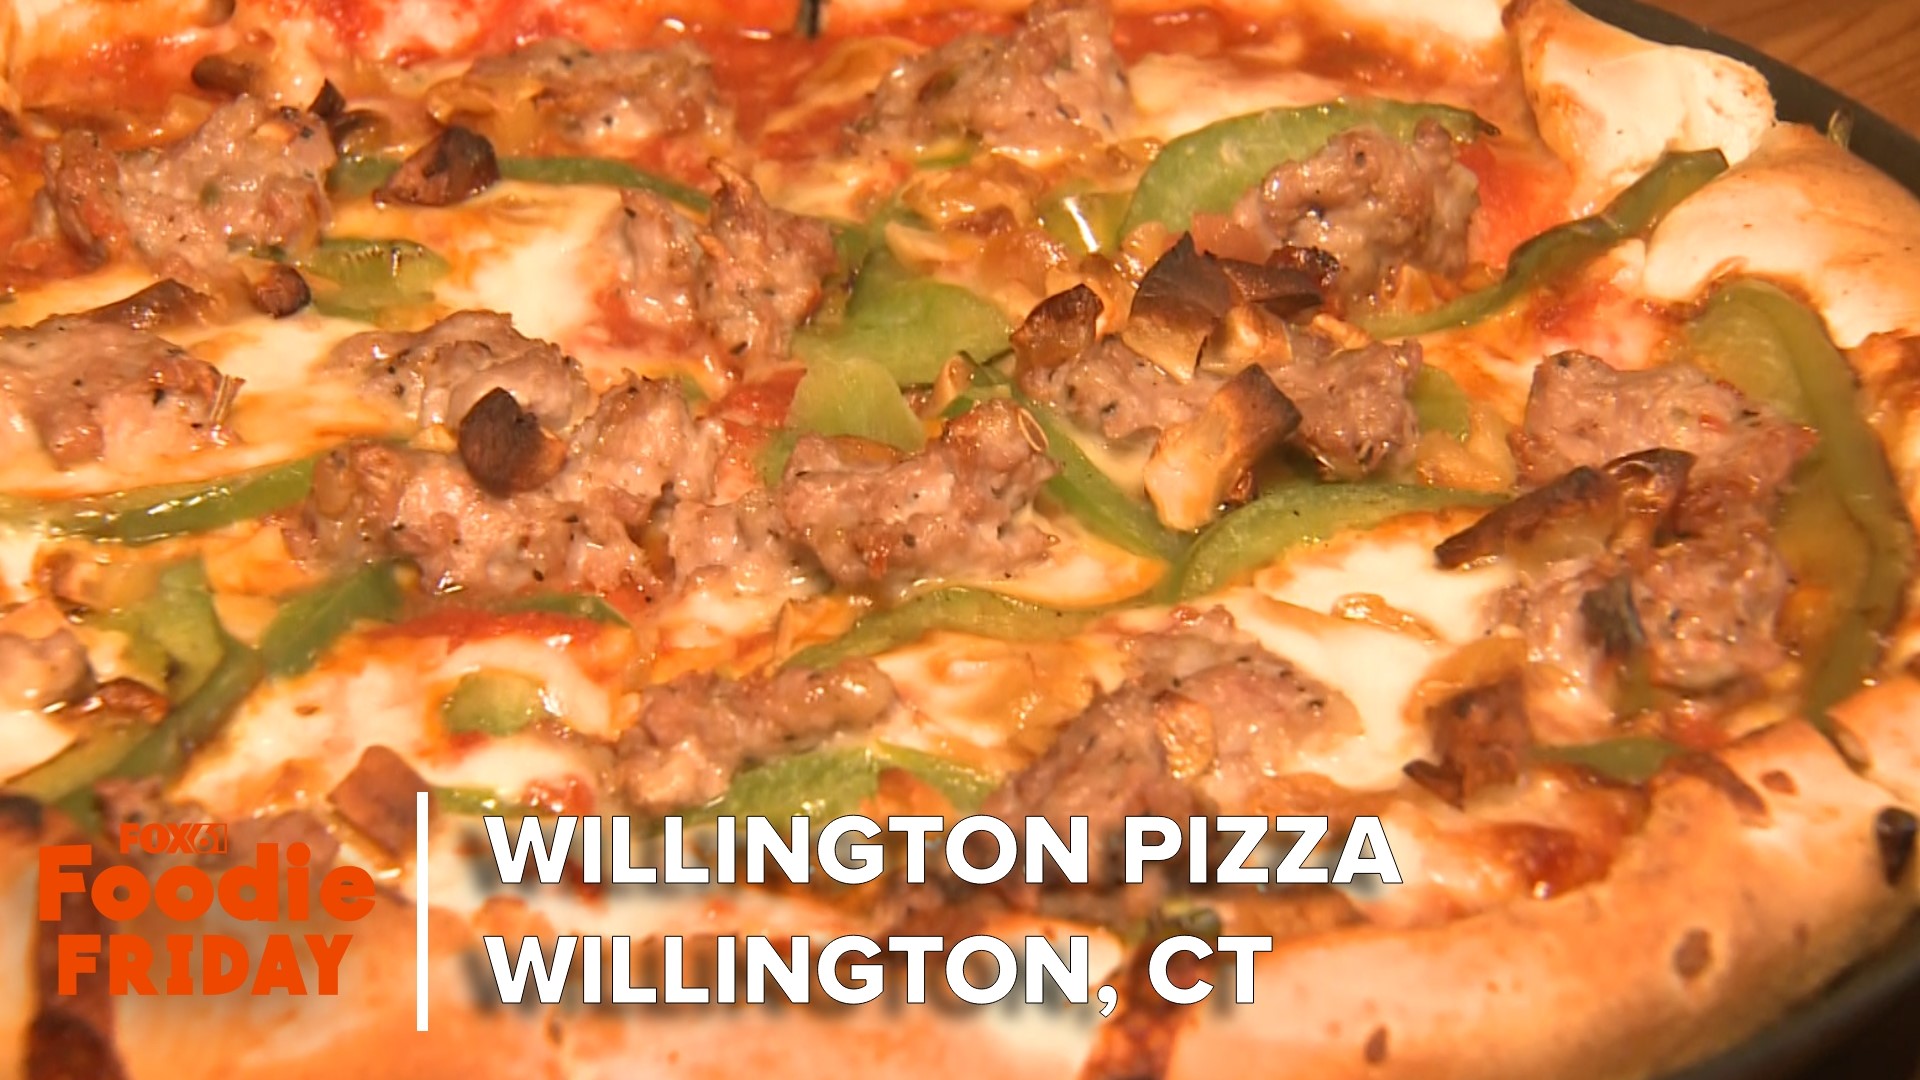 FOX61's Rachel Piscitelli visits Willington Pizza for Foodie Friday.